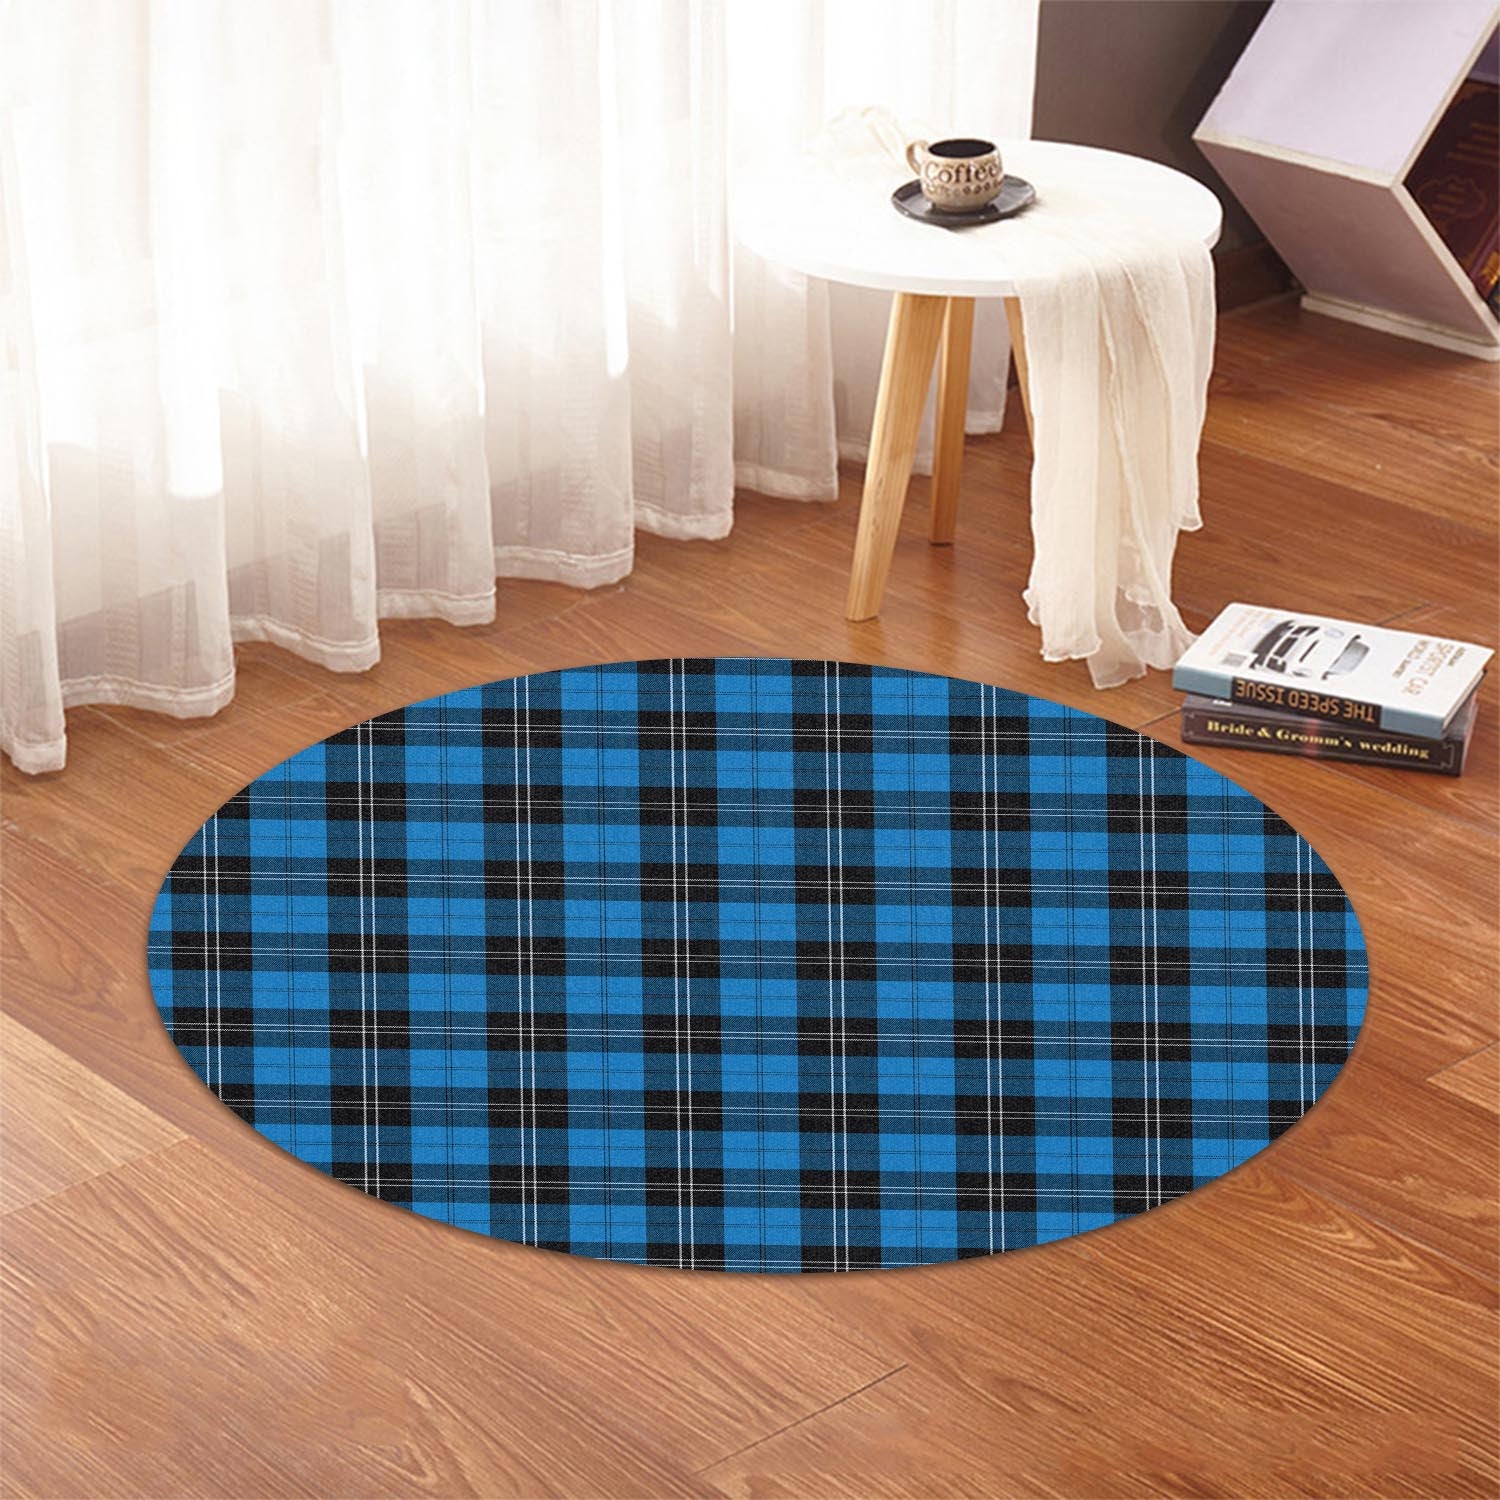 ramsay-blue-ancient-tartan-round-rug